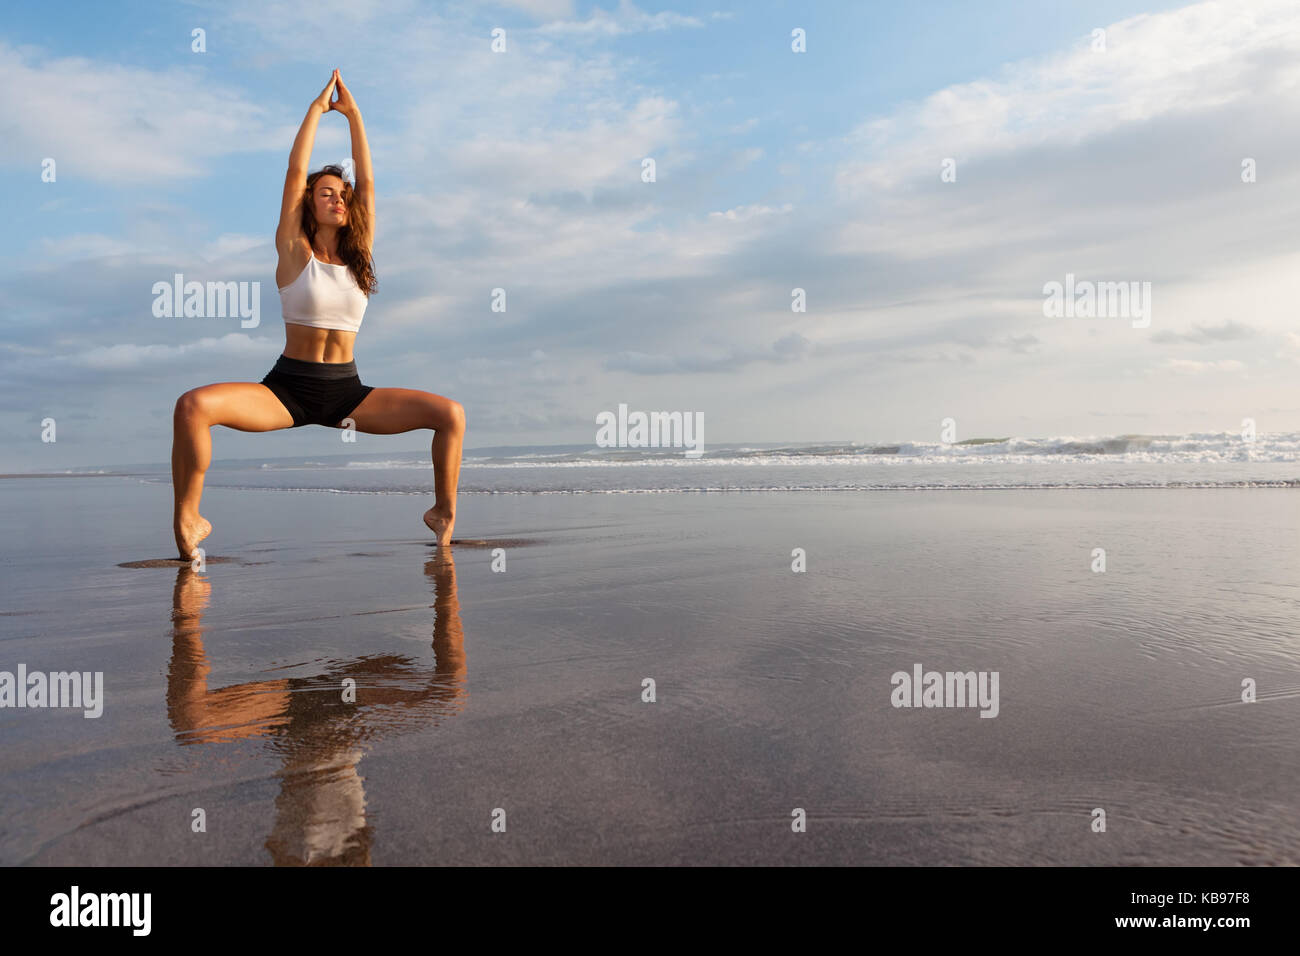 theyogamentor | Yoga photography, Yoga photoshoot, Beach yoga